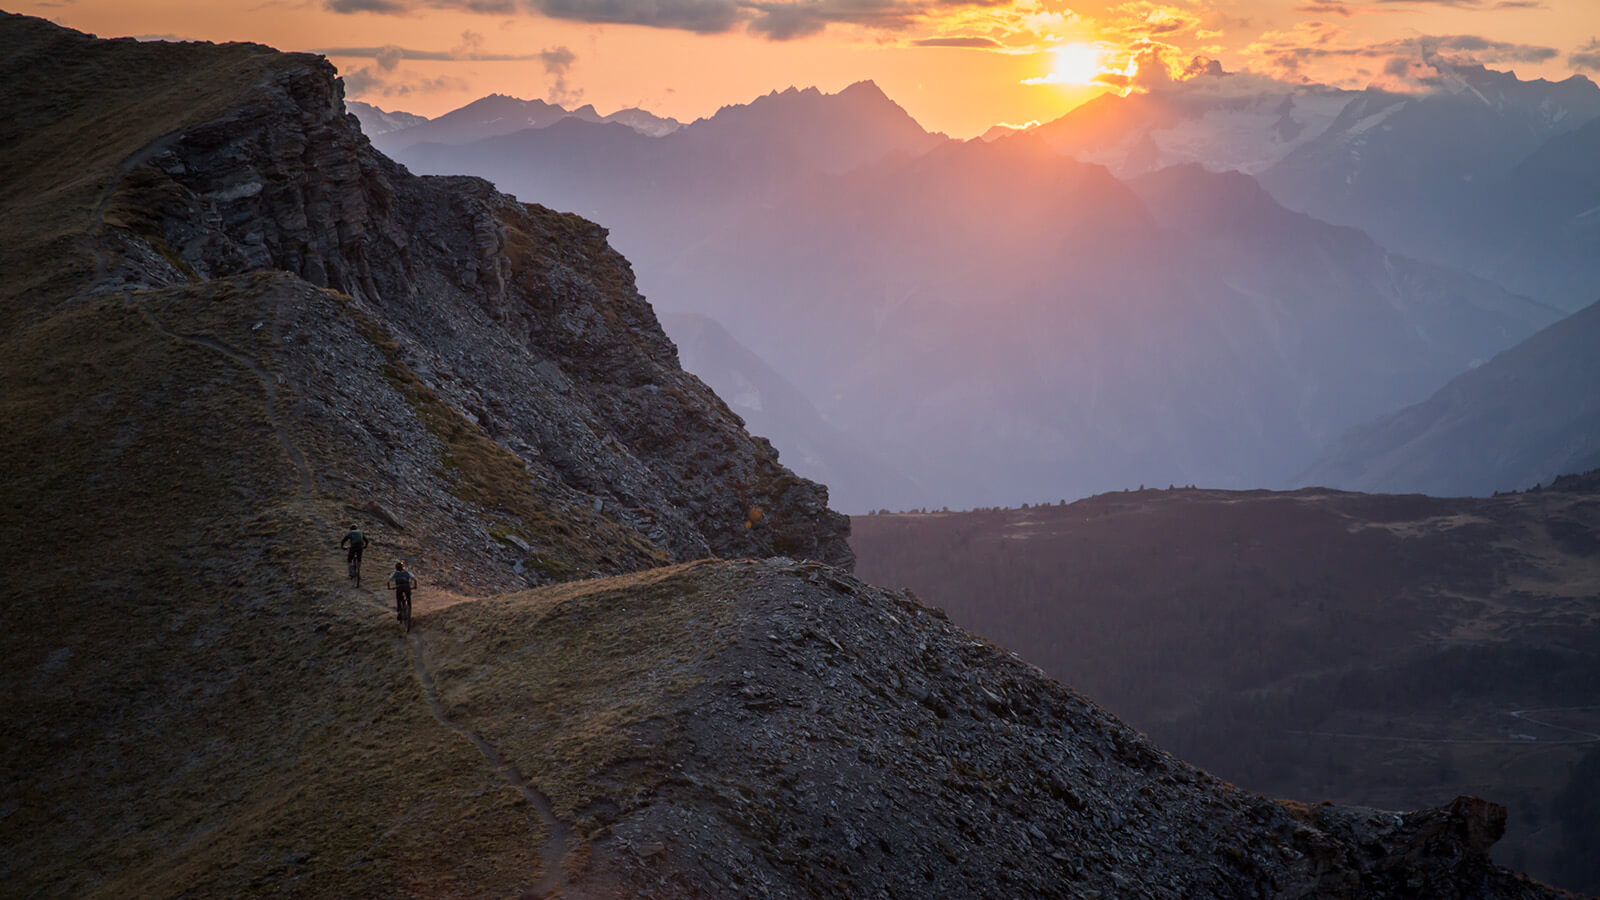 Aosta, Italy - Breathtaking experience from hut to hut